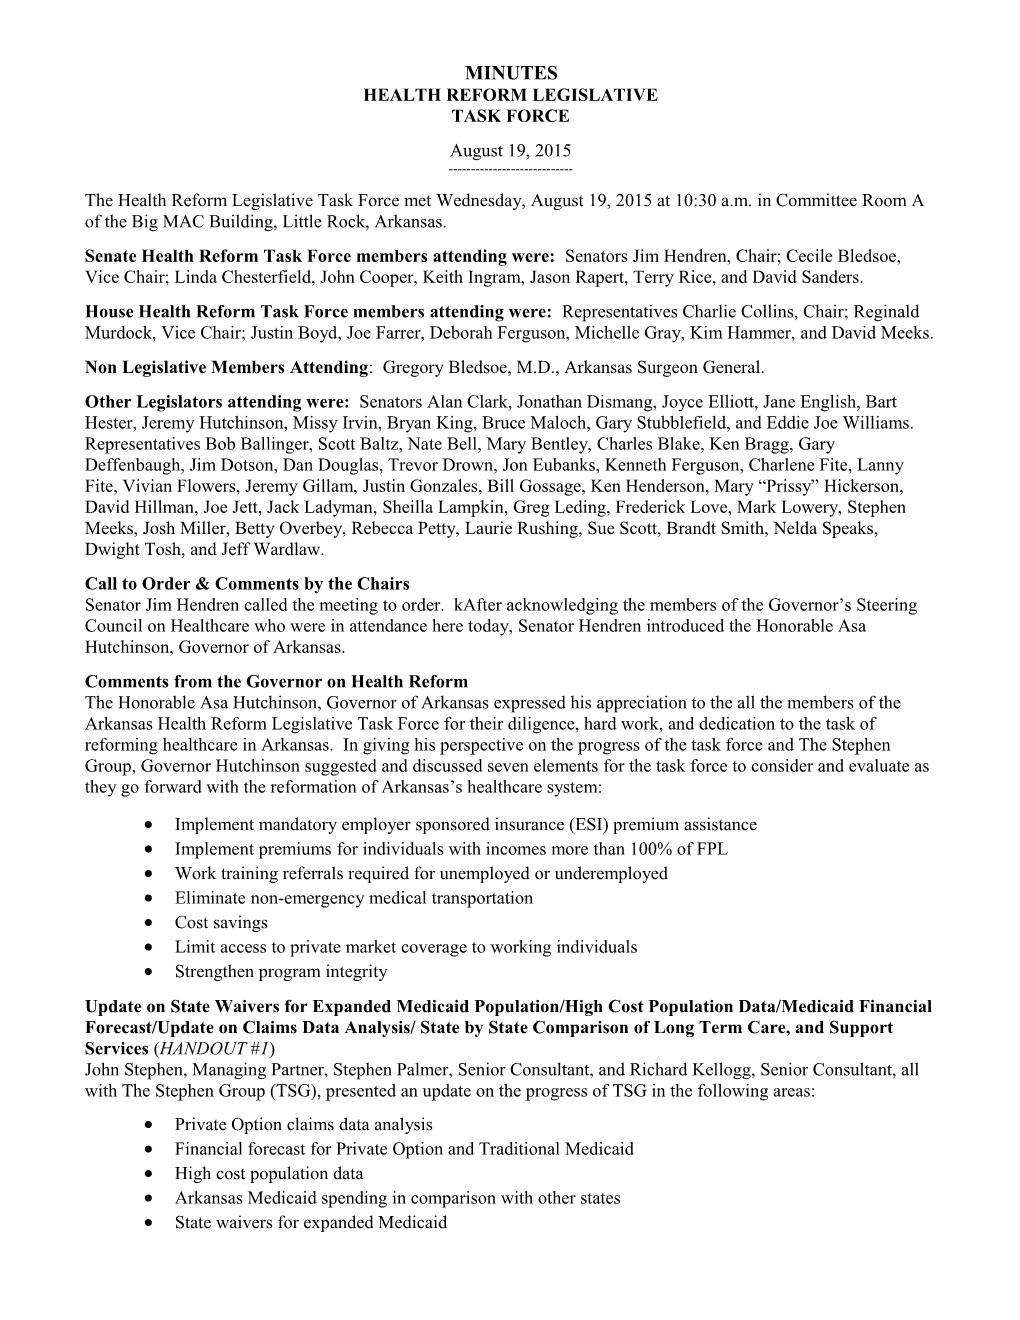 Health Reform Legislative Task Force Page 3 of 3